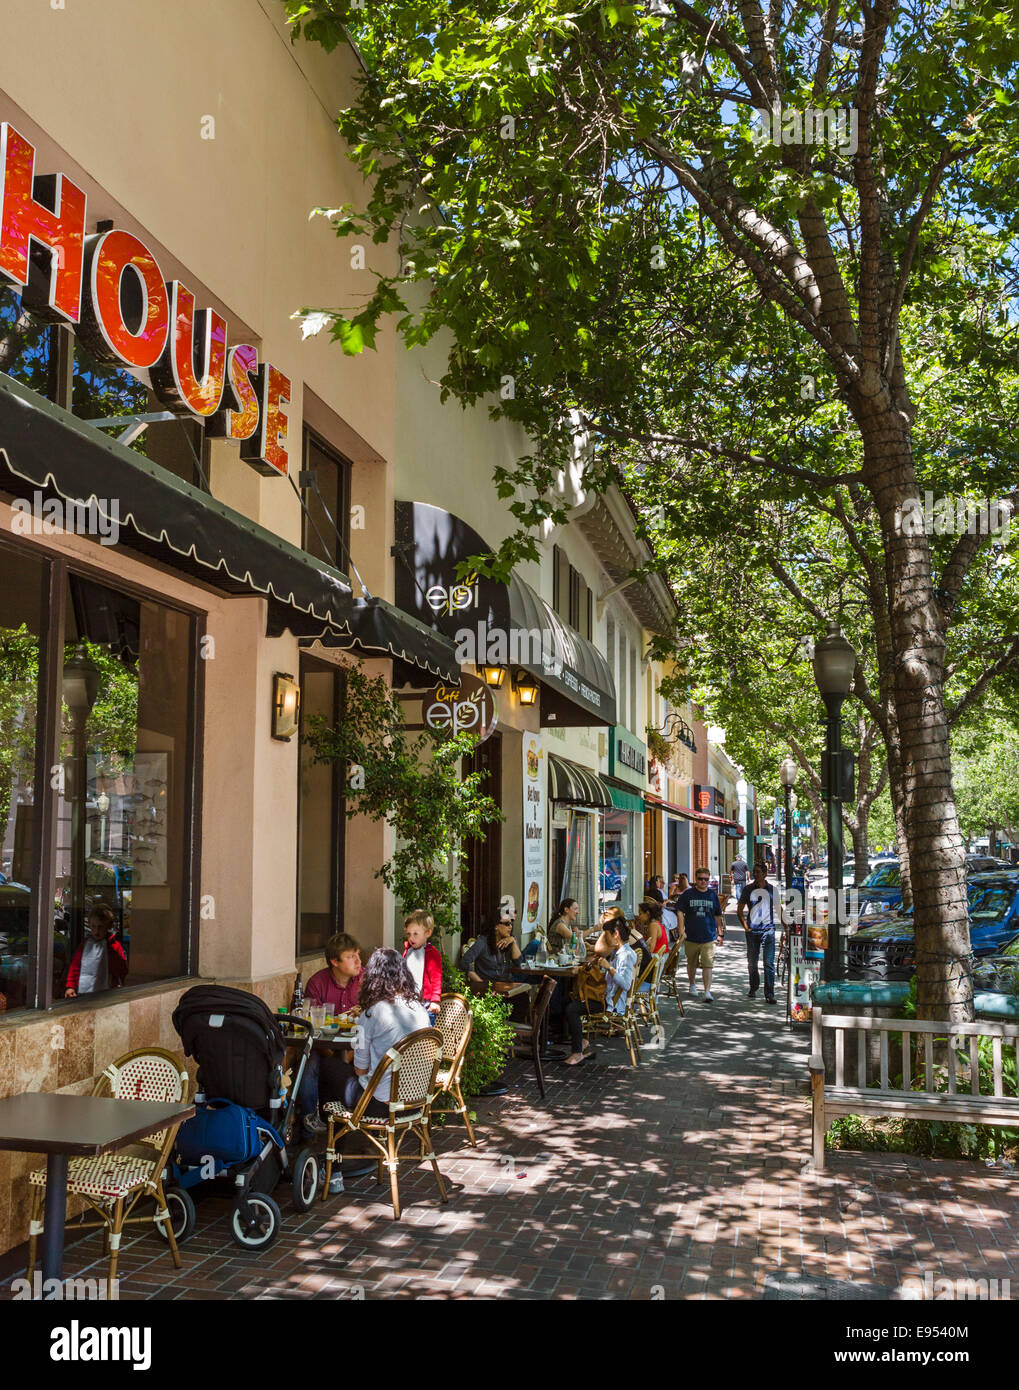 Cafes and shops on University Avenue in downtown Palo Alto, Santa Clara County, California, USA Stock Photo